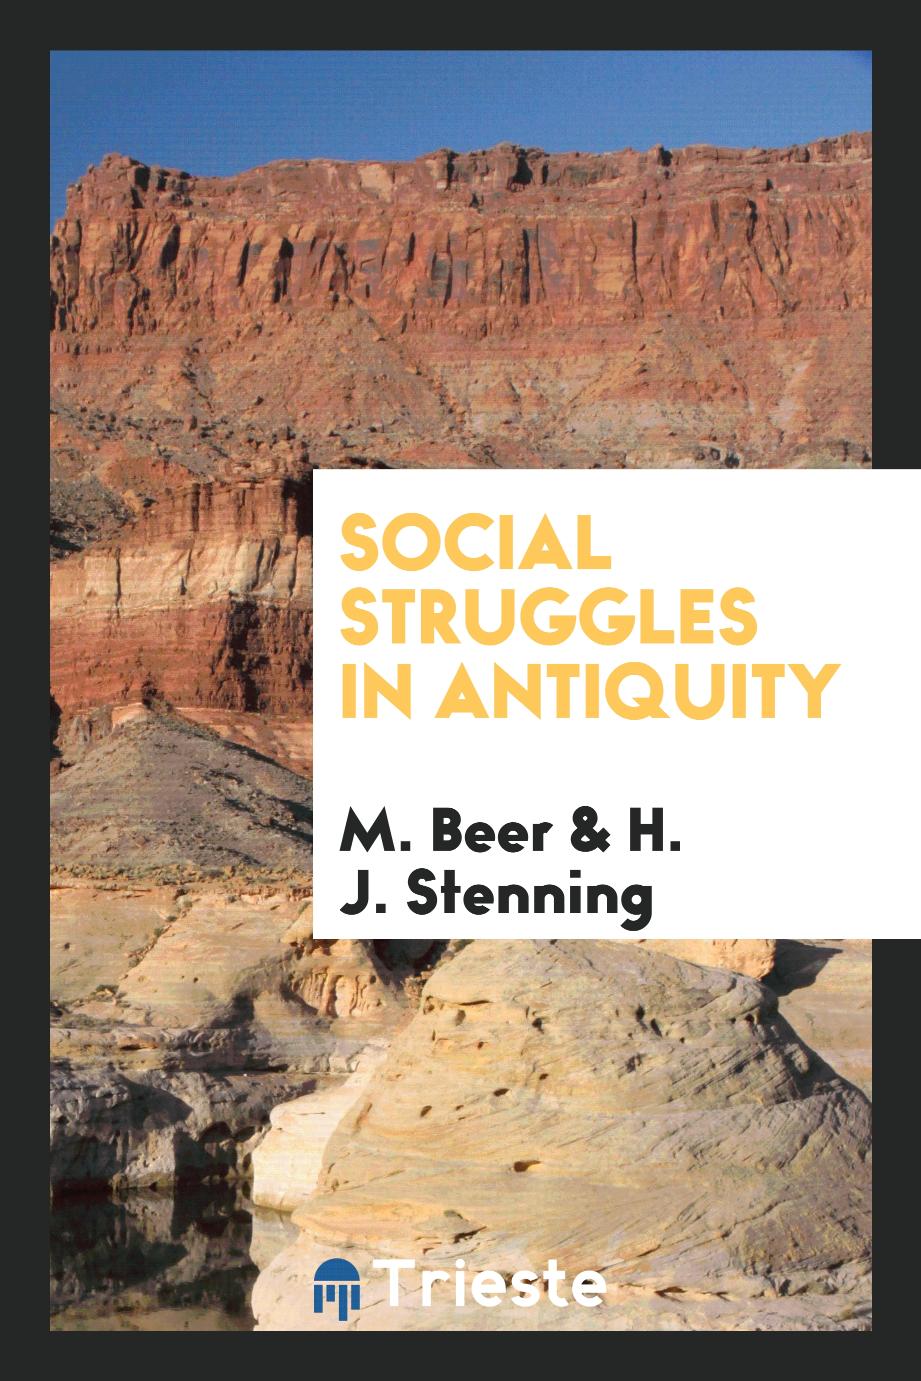 M. Beer, H. J. Stenning - Social struggles in antiquity